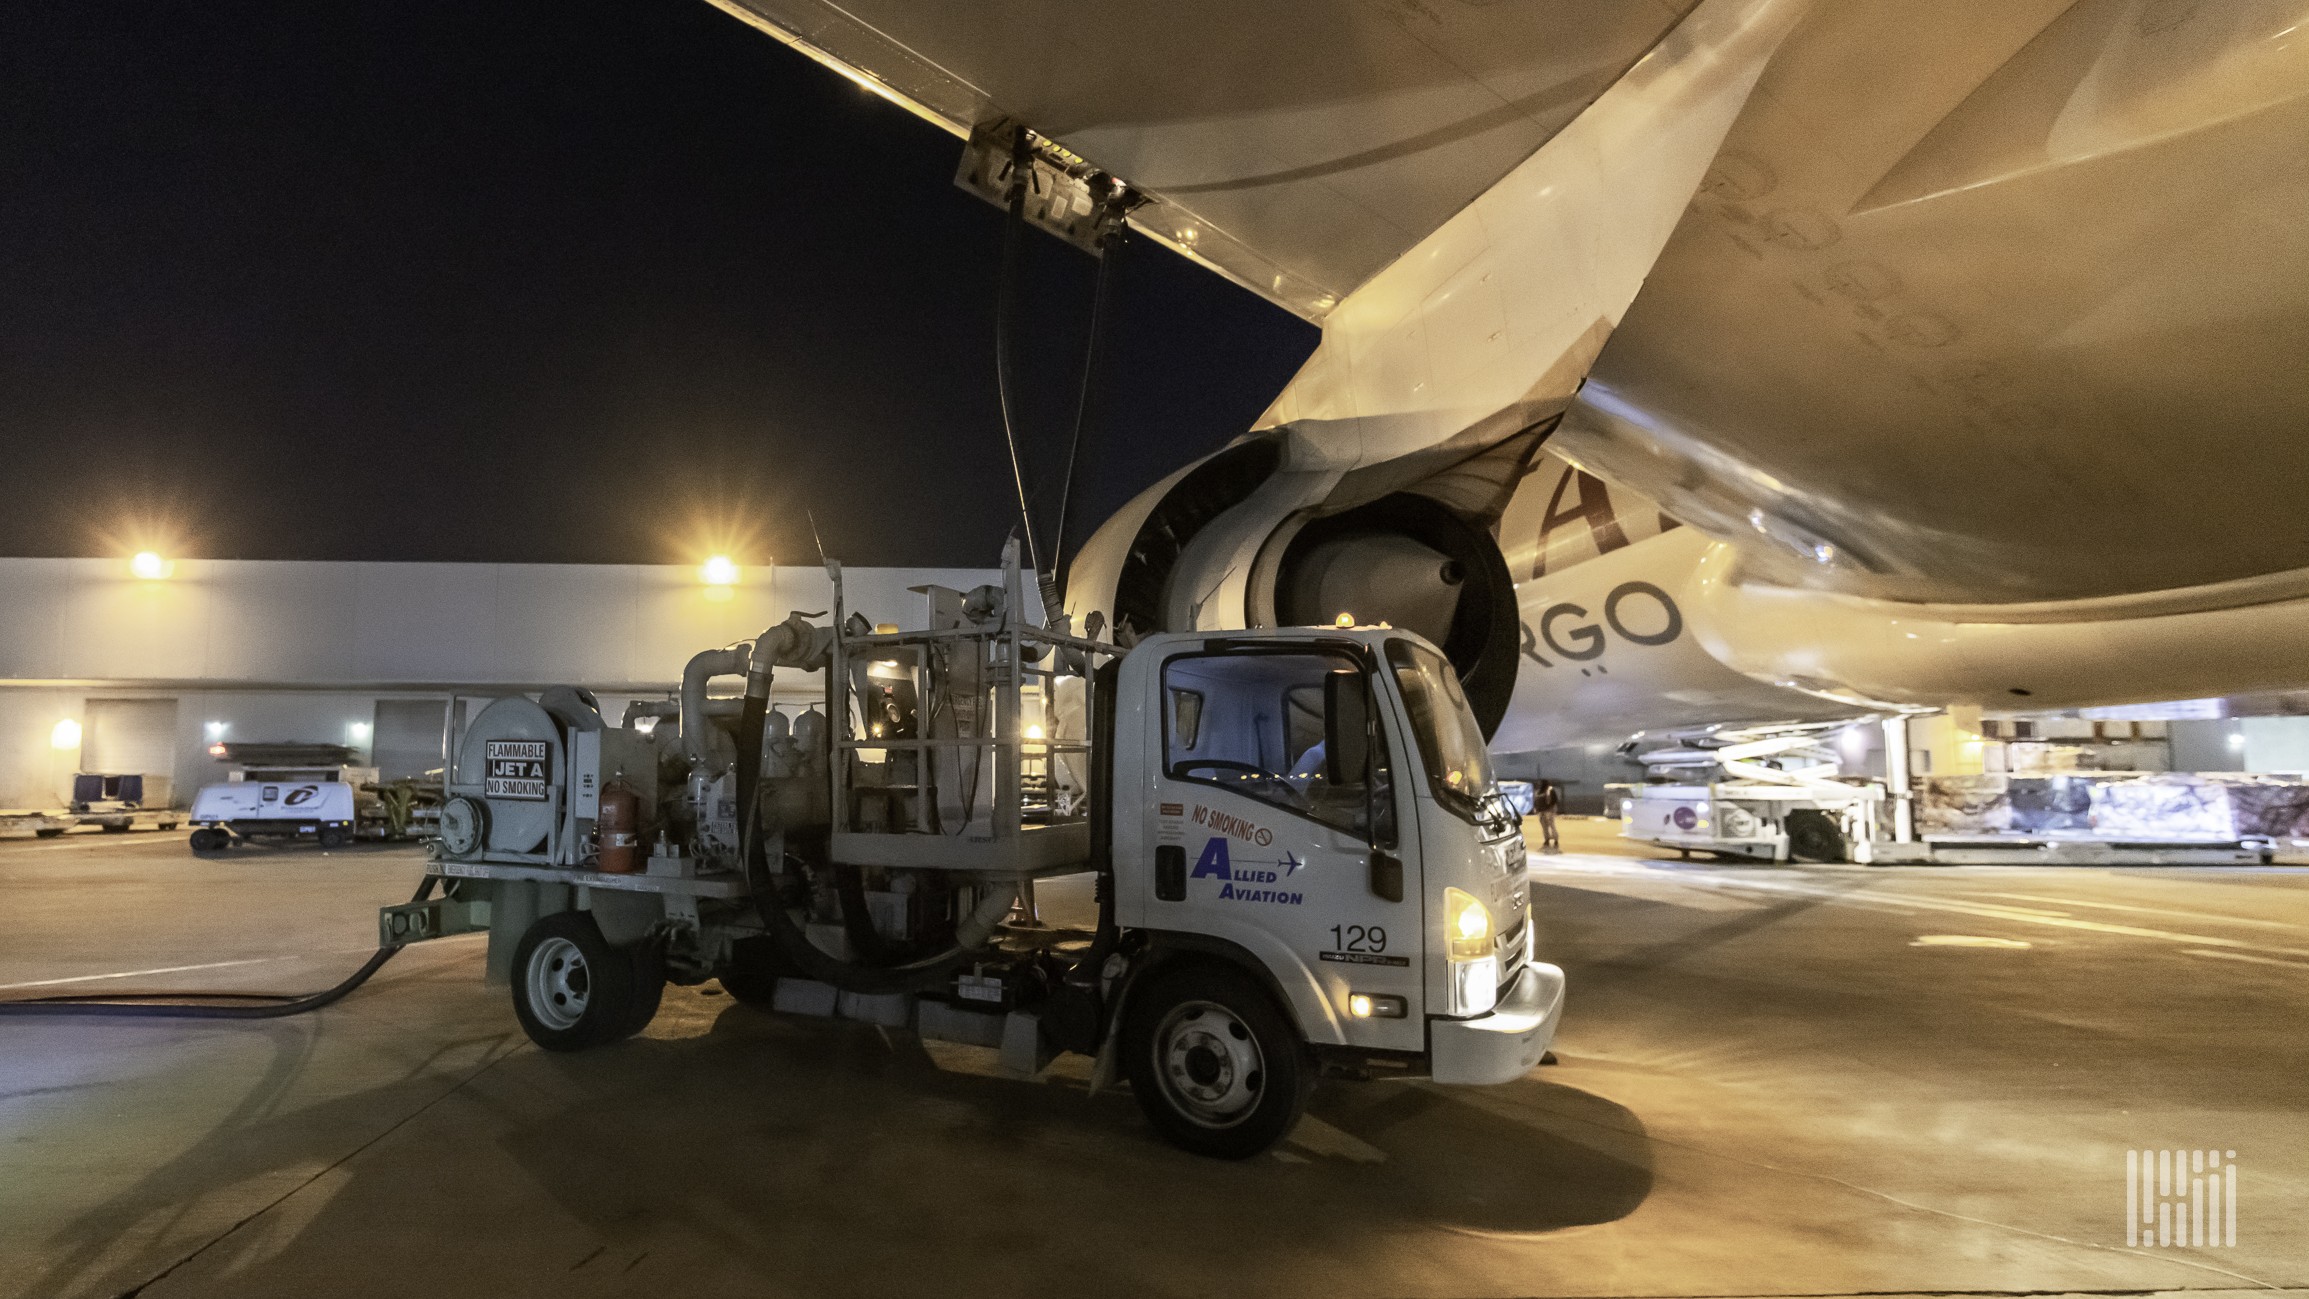 A fuel truck refills a plane at night.